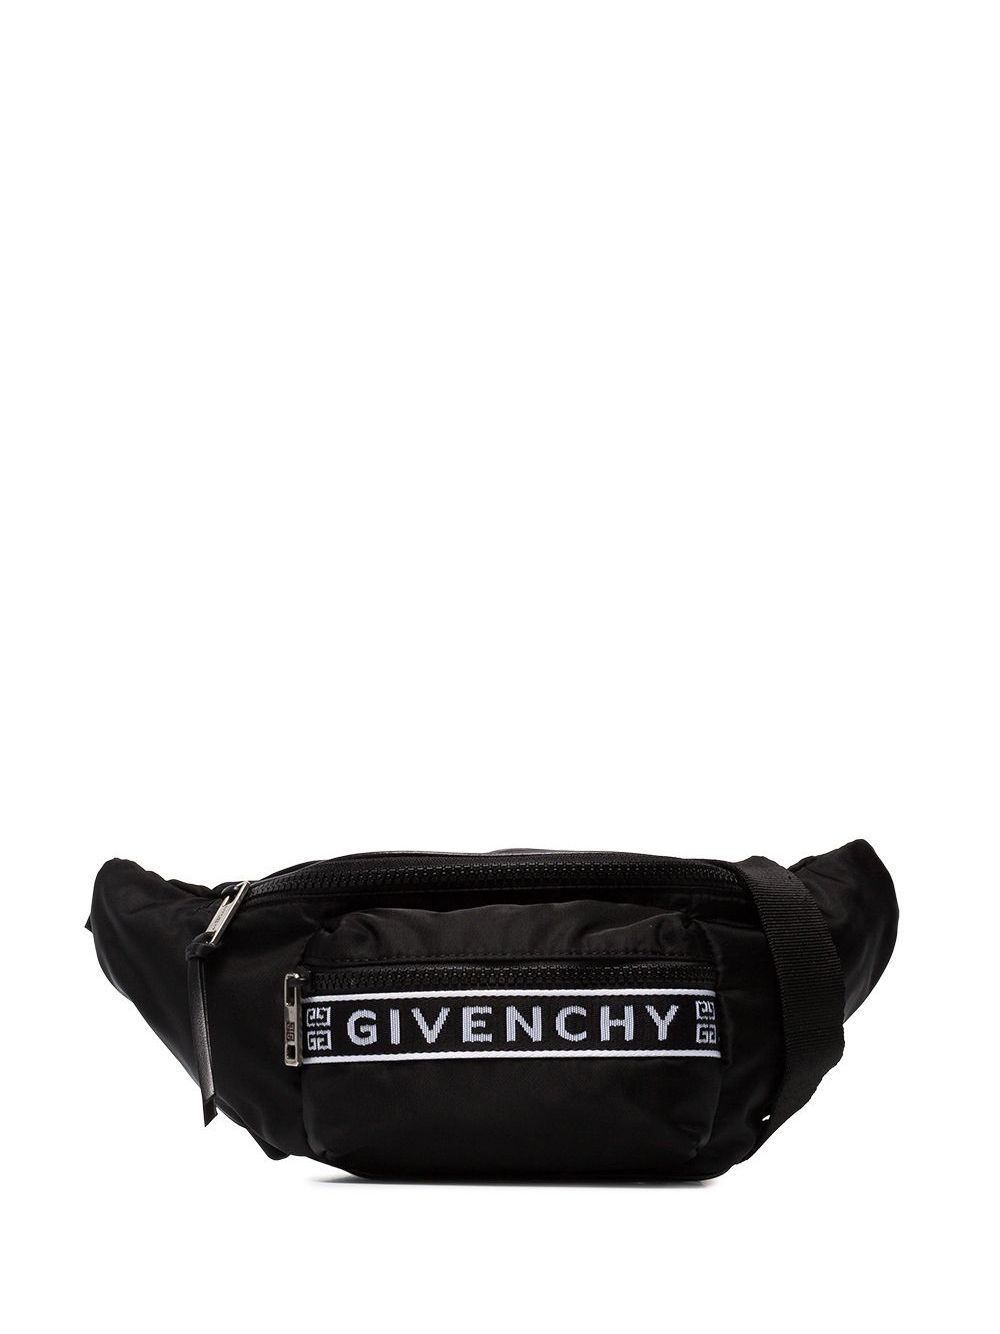 фото Givenchy поясная сумка '4g'